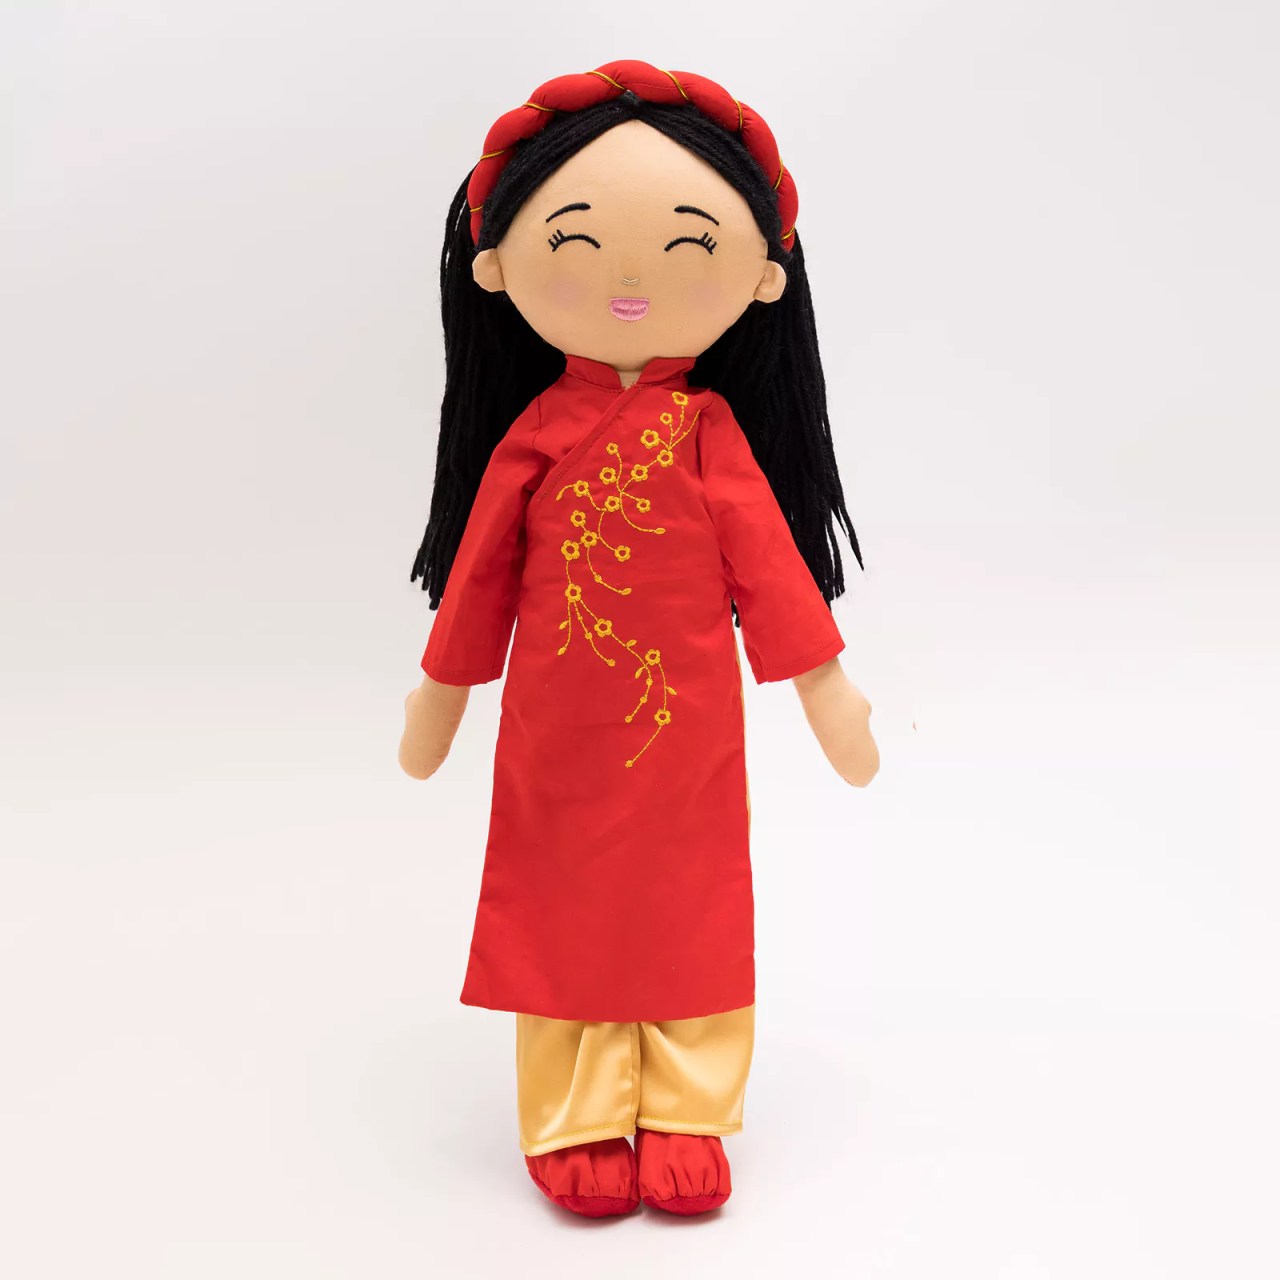 Vietnamese ‘Hoa’ Cultural Doll